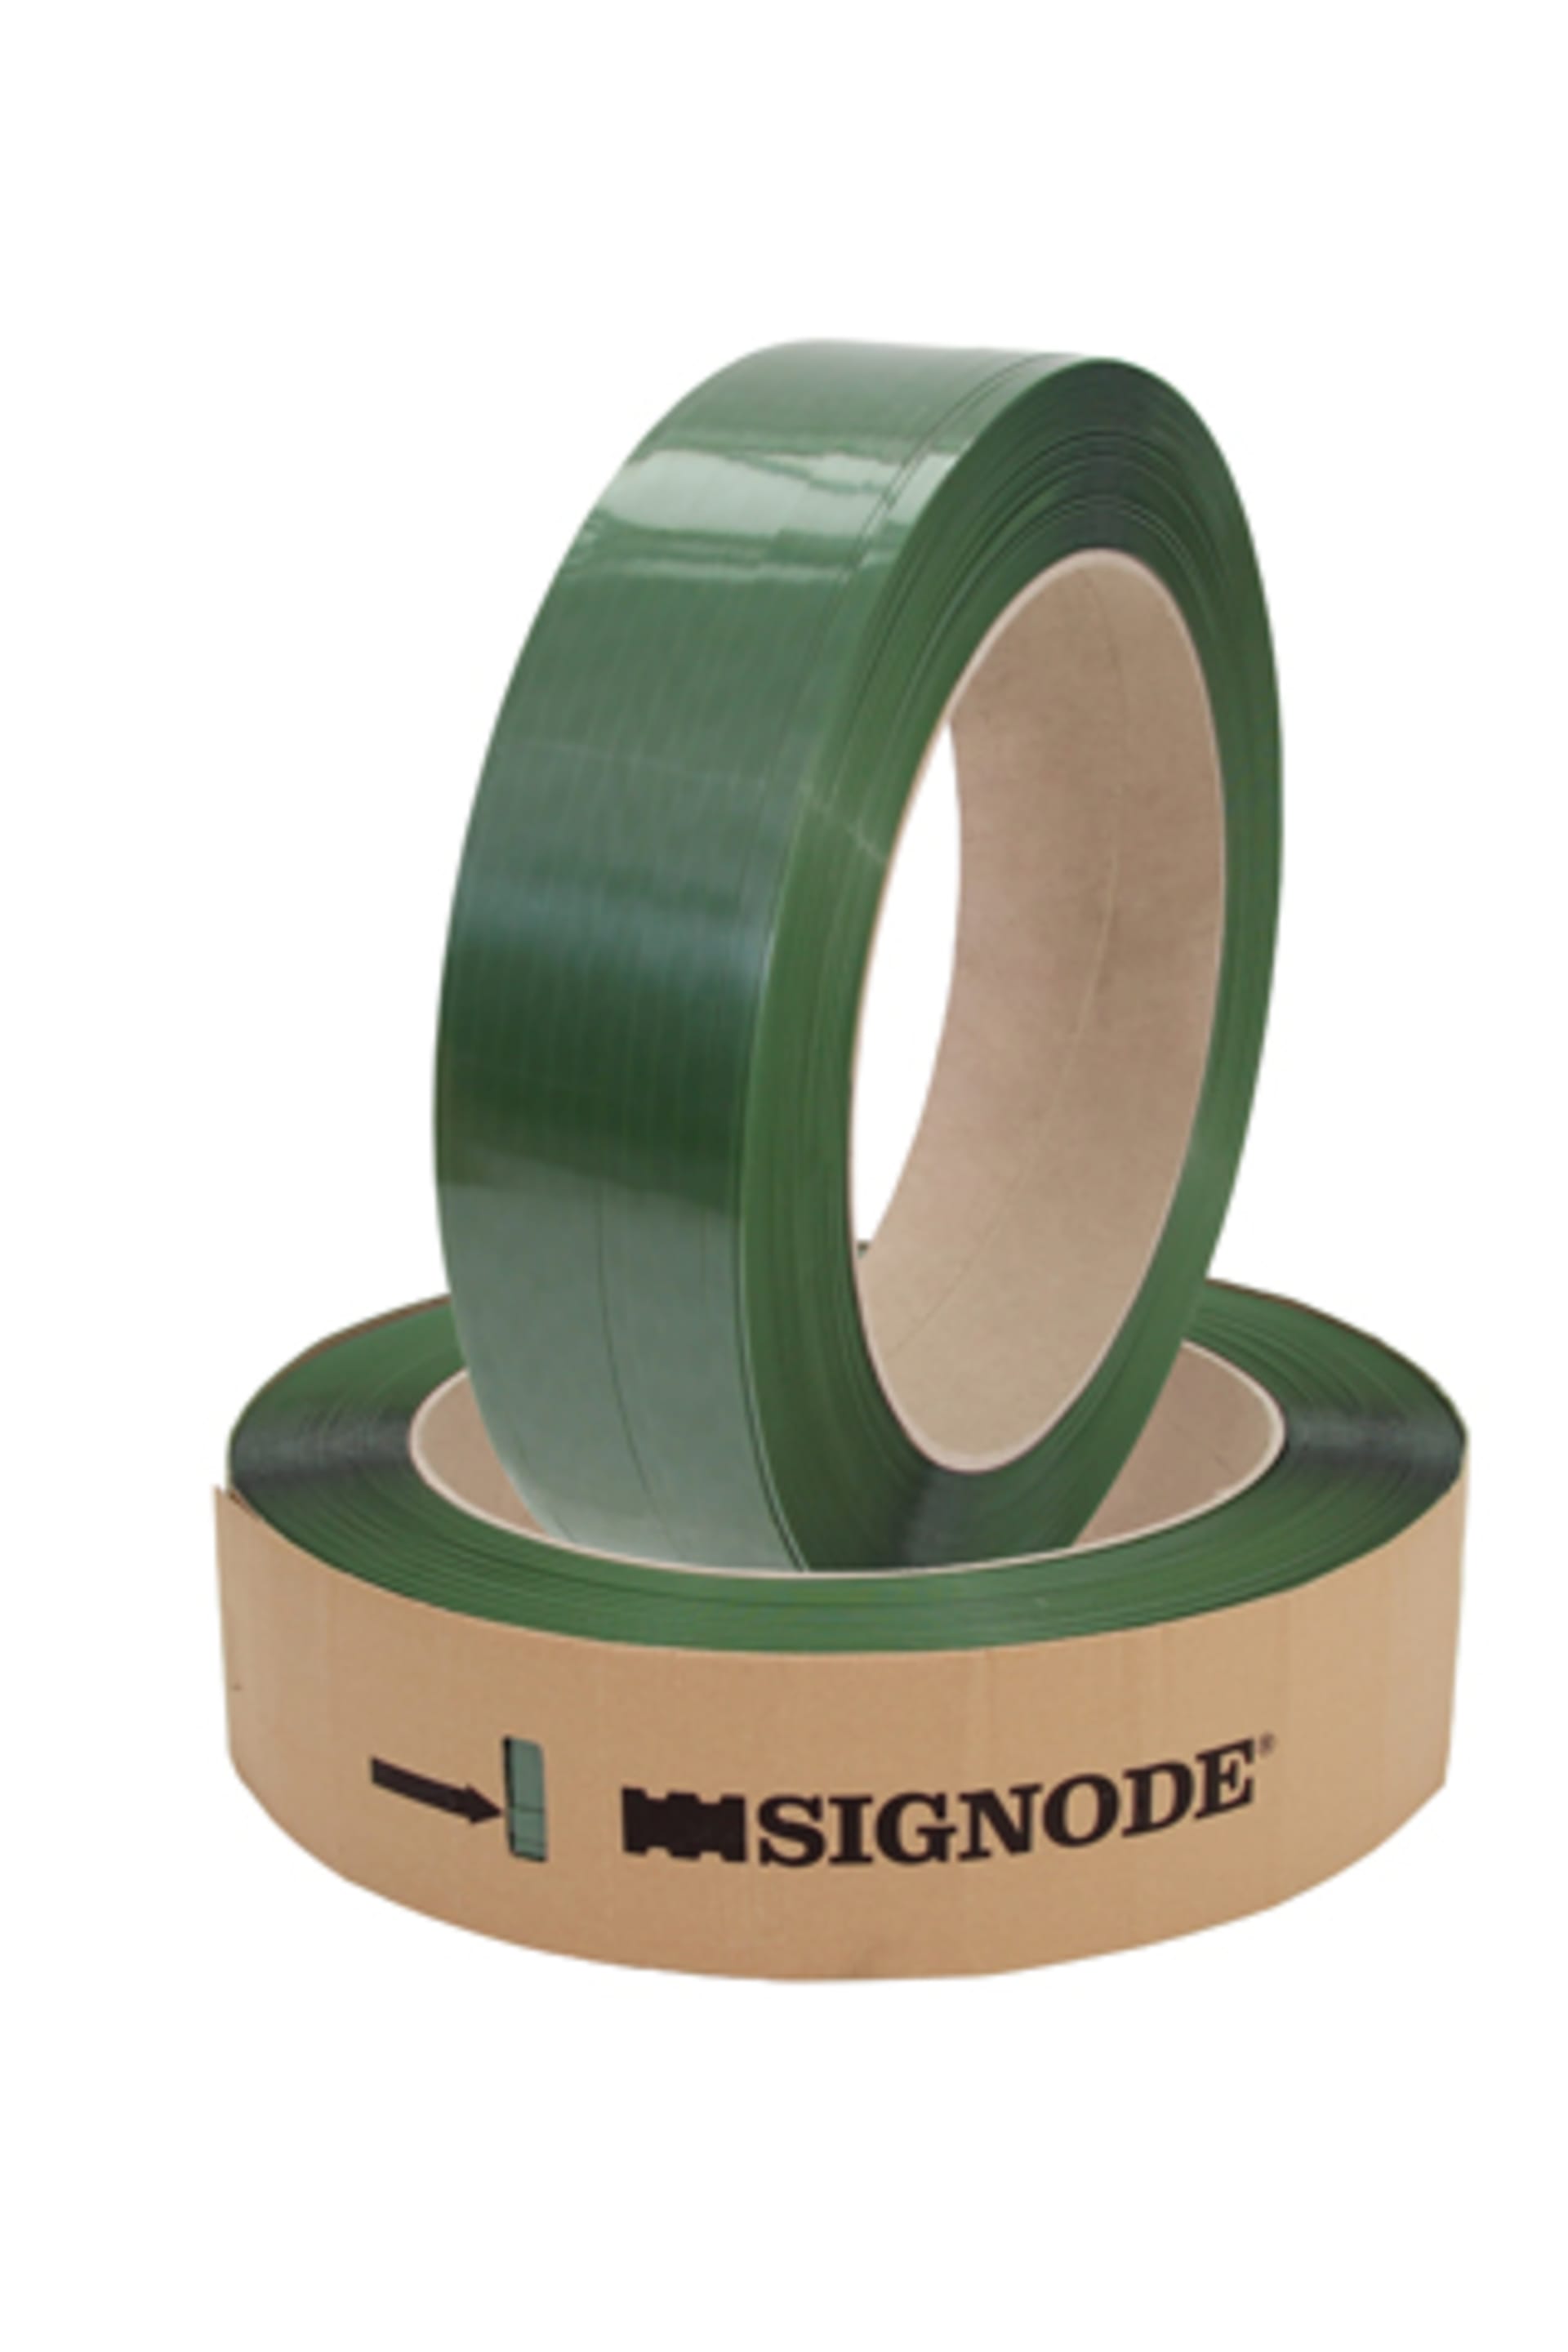 SIGNODE-TENAX-Band 2040, 15,6x0,9mmx1300lfm, grün, glatt, 406mm Kern, Reißfestigkeit 642kp